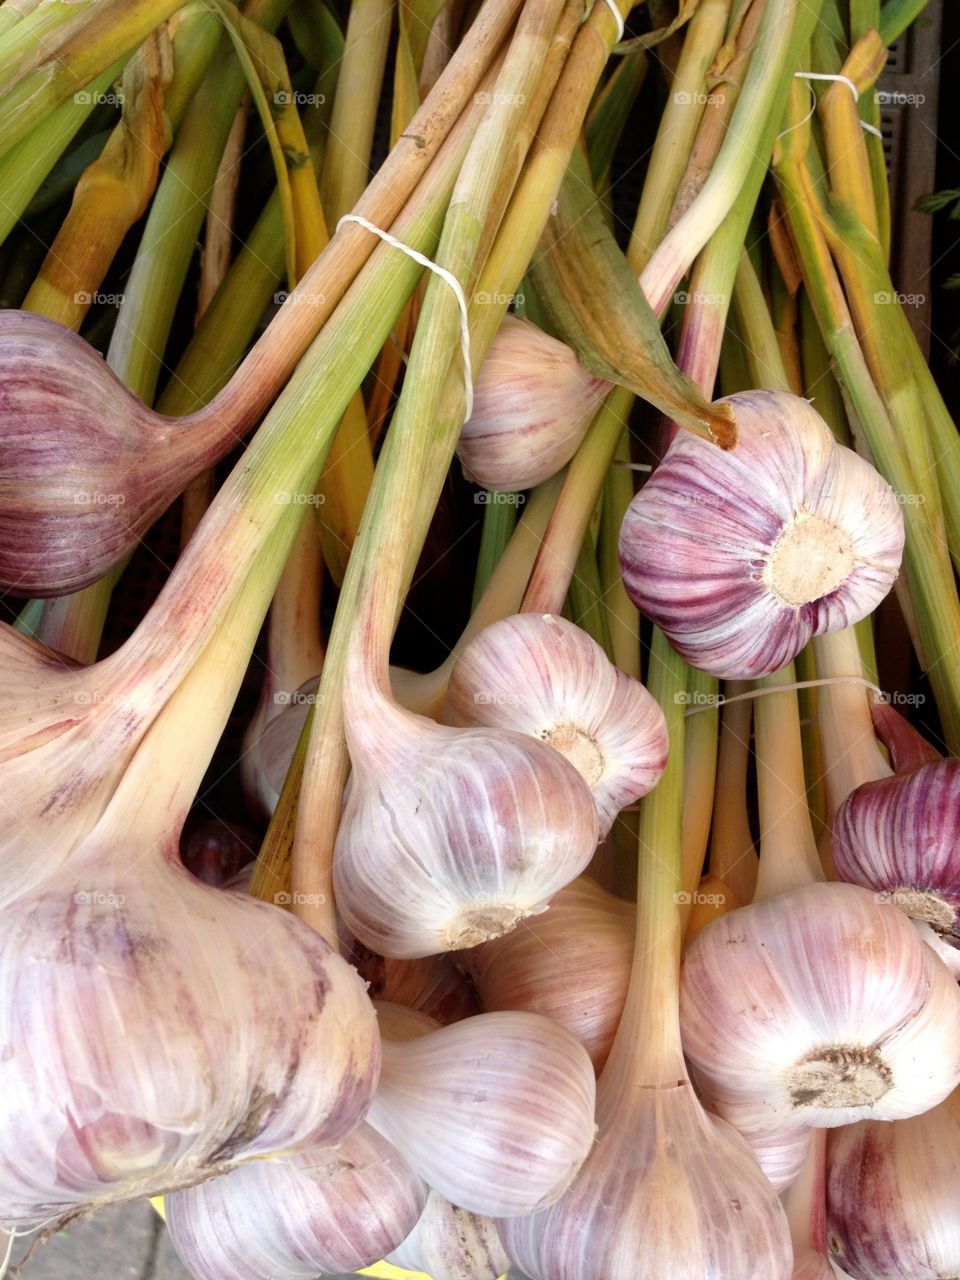 Garlic in Finland. Farmers market in Finland